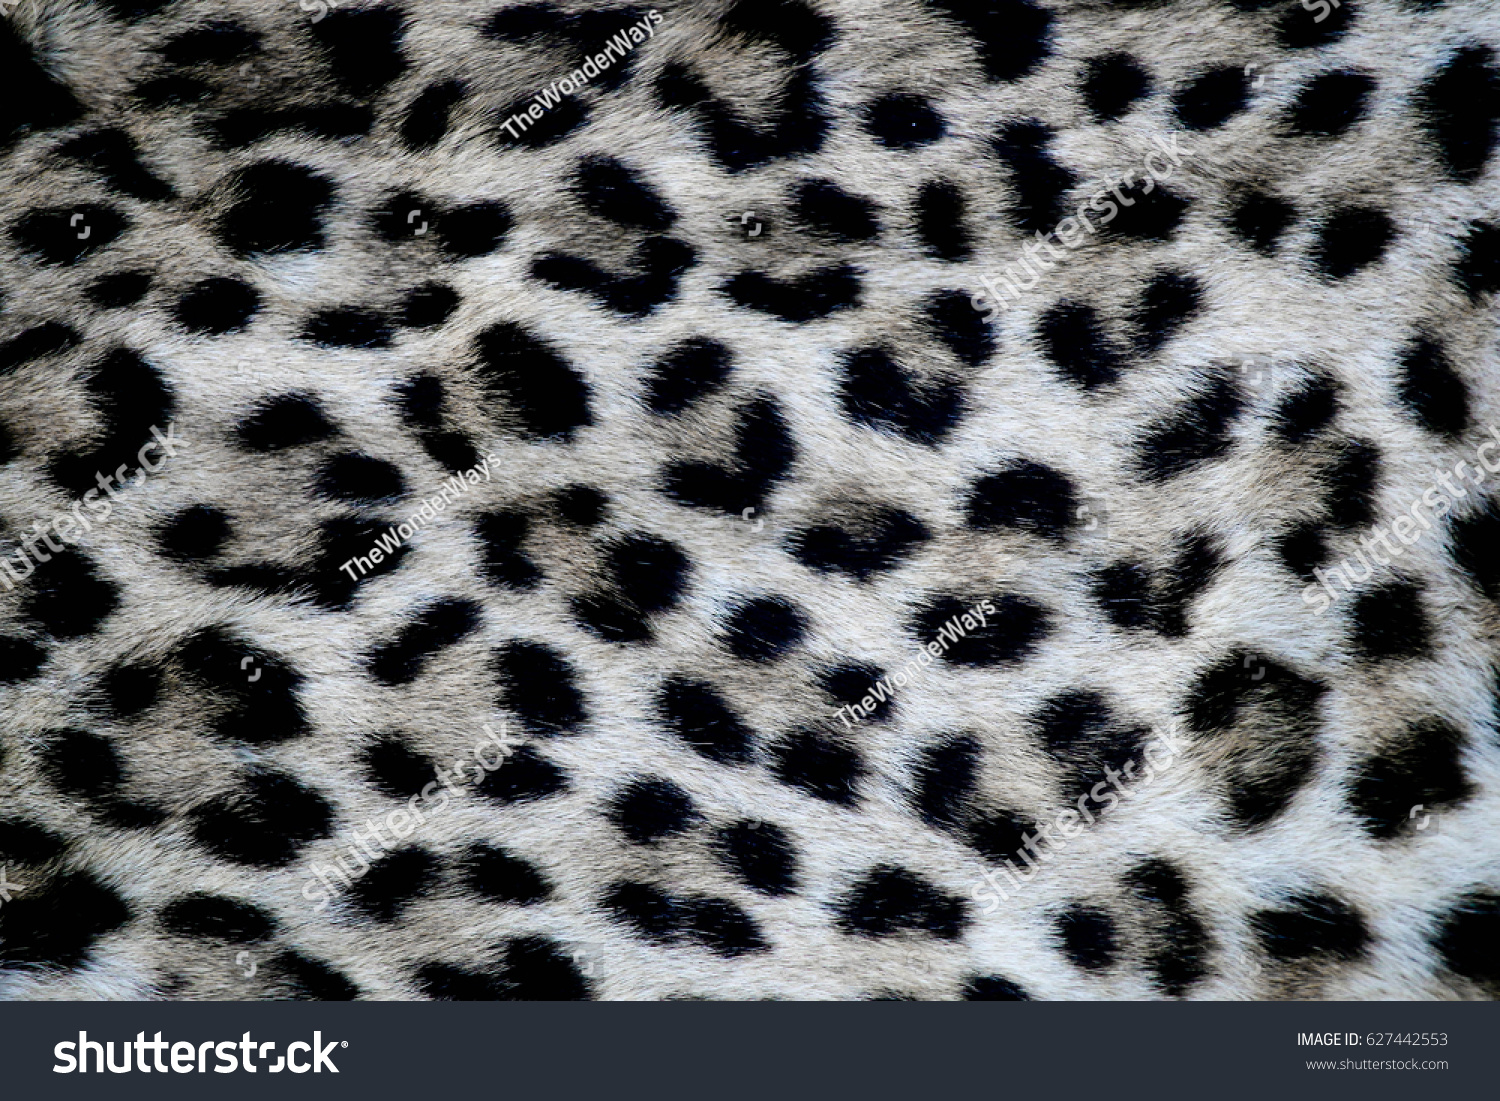 Leopard fur #627442553